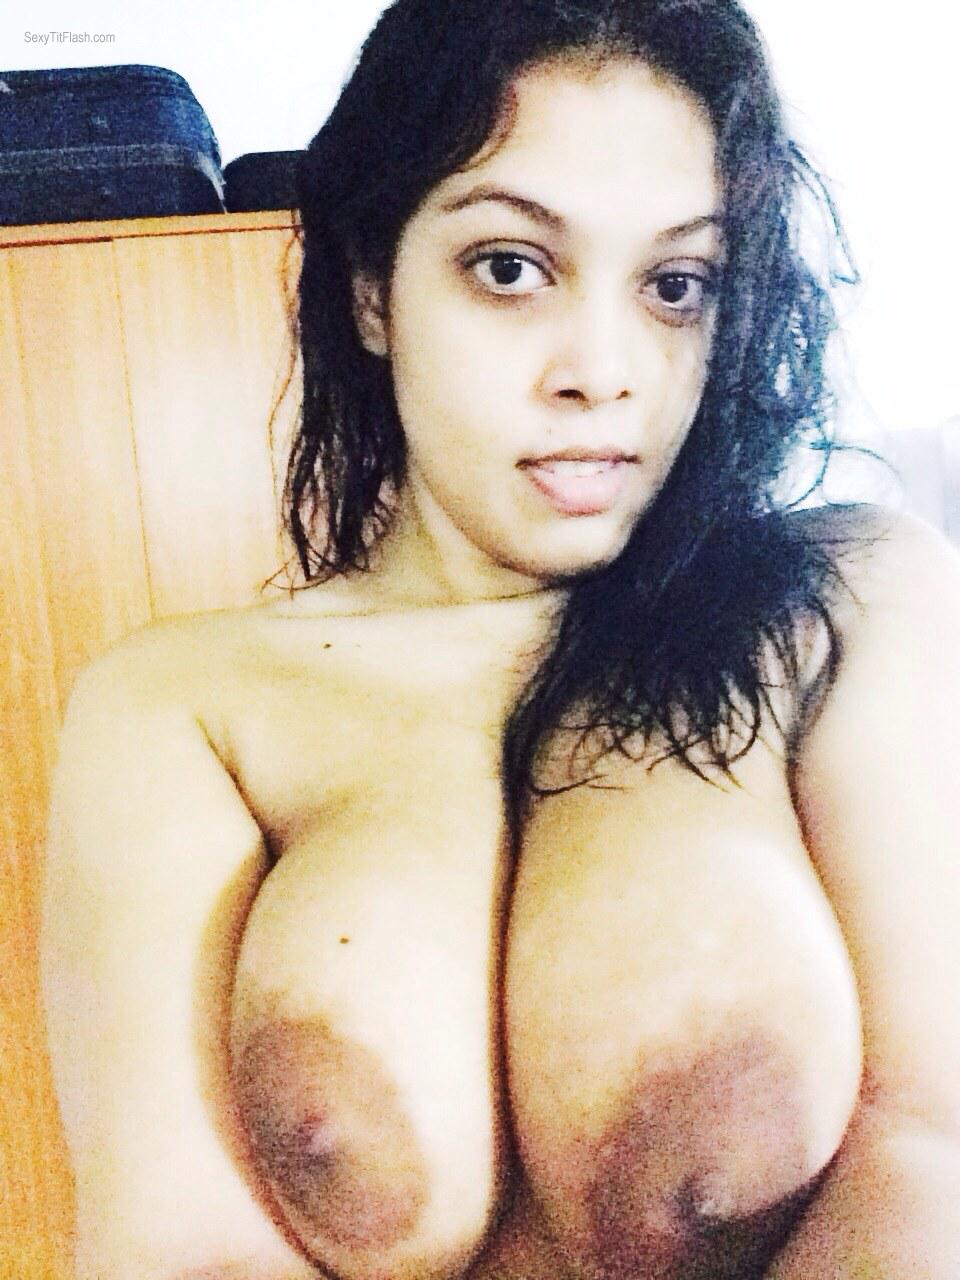 Very big Tits Of My Wife Topless Selfie by Hun